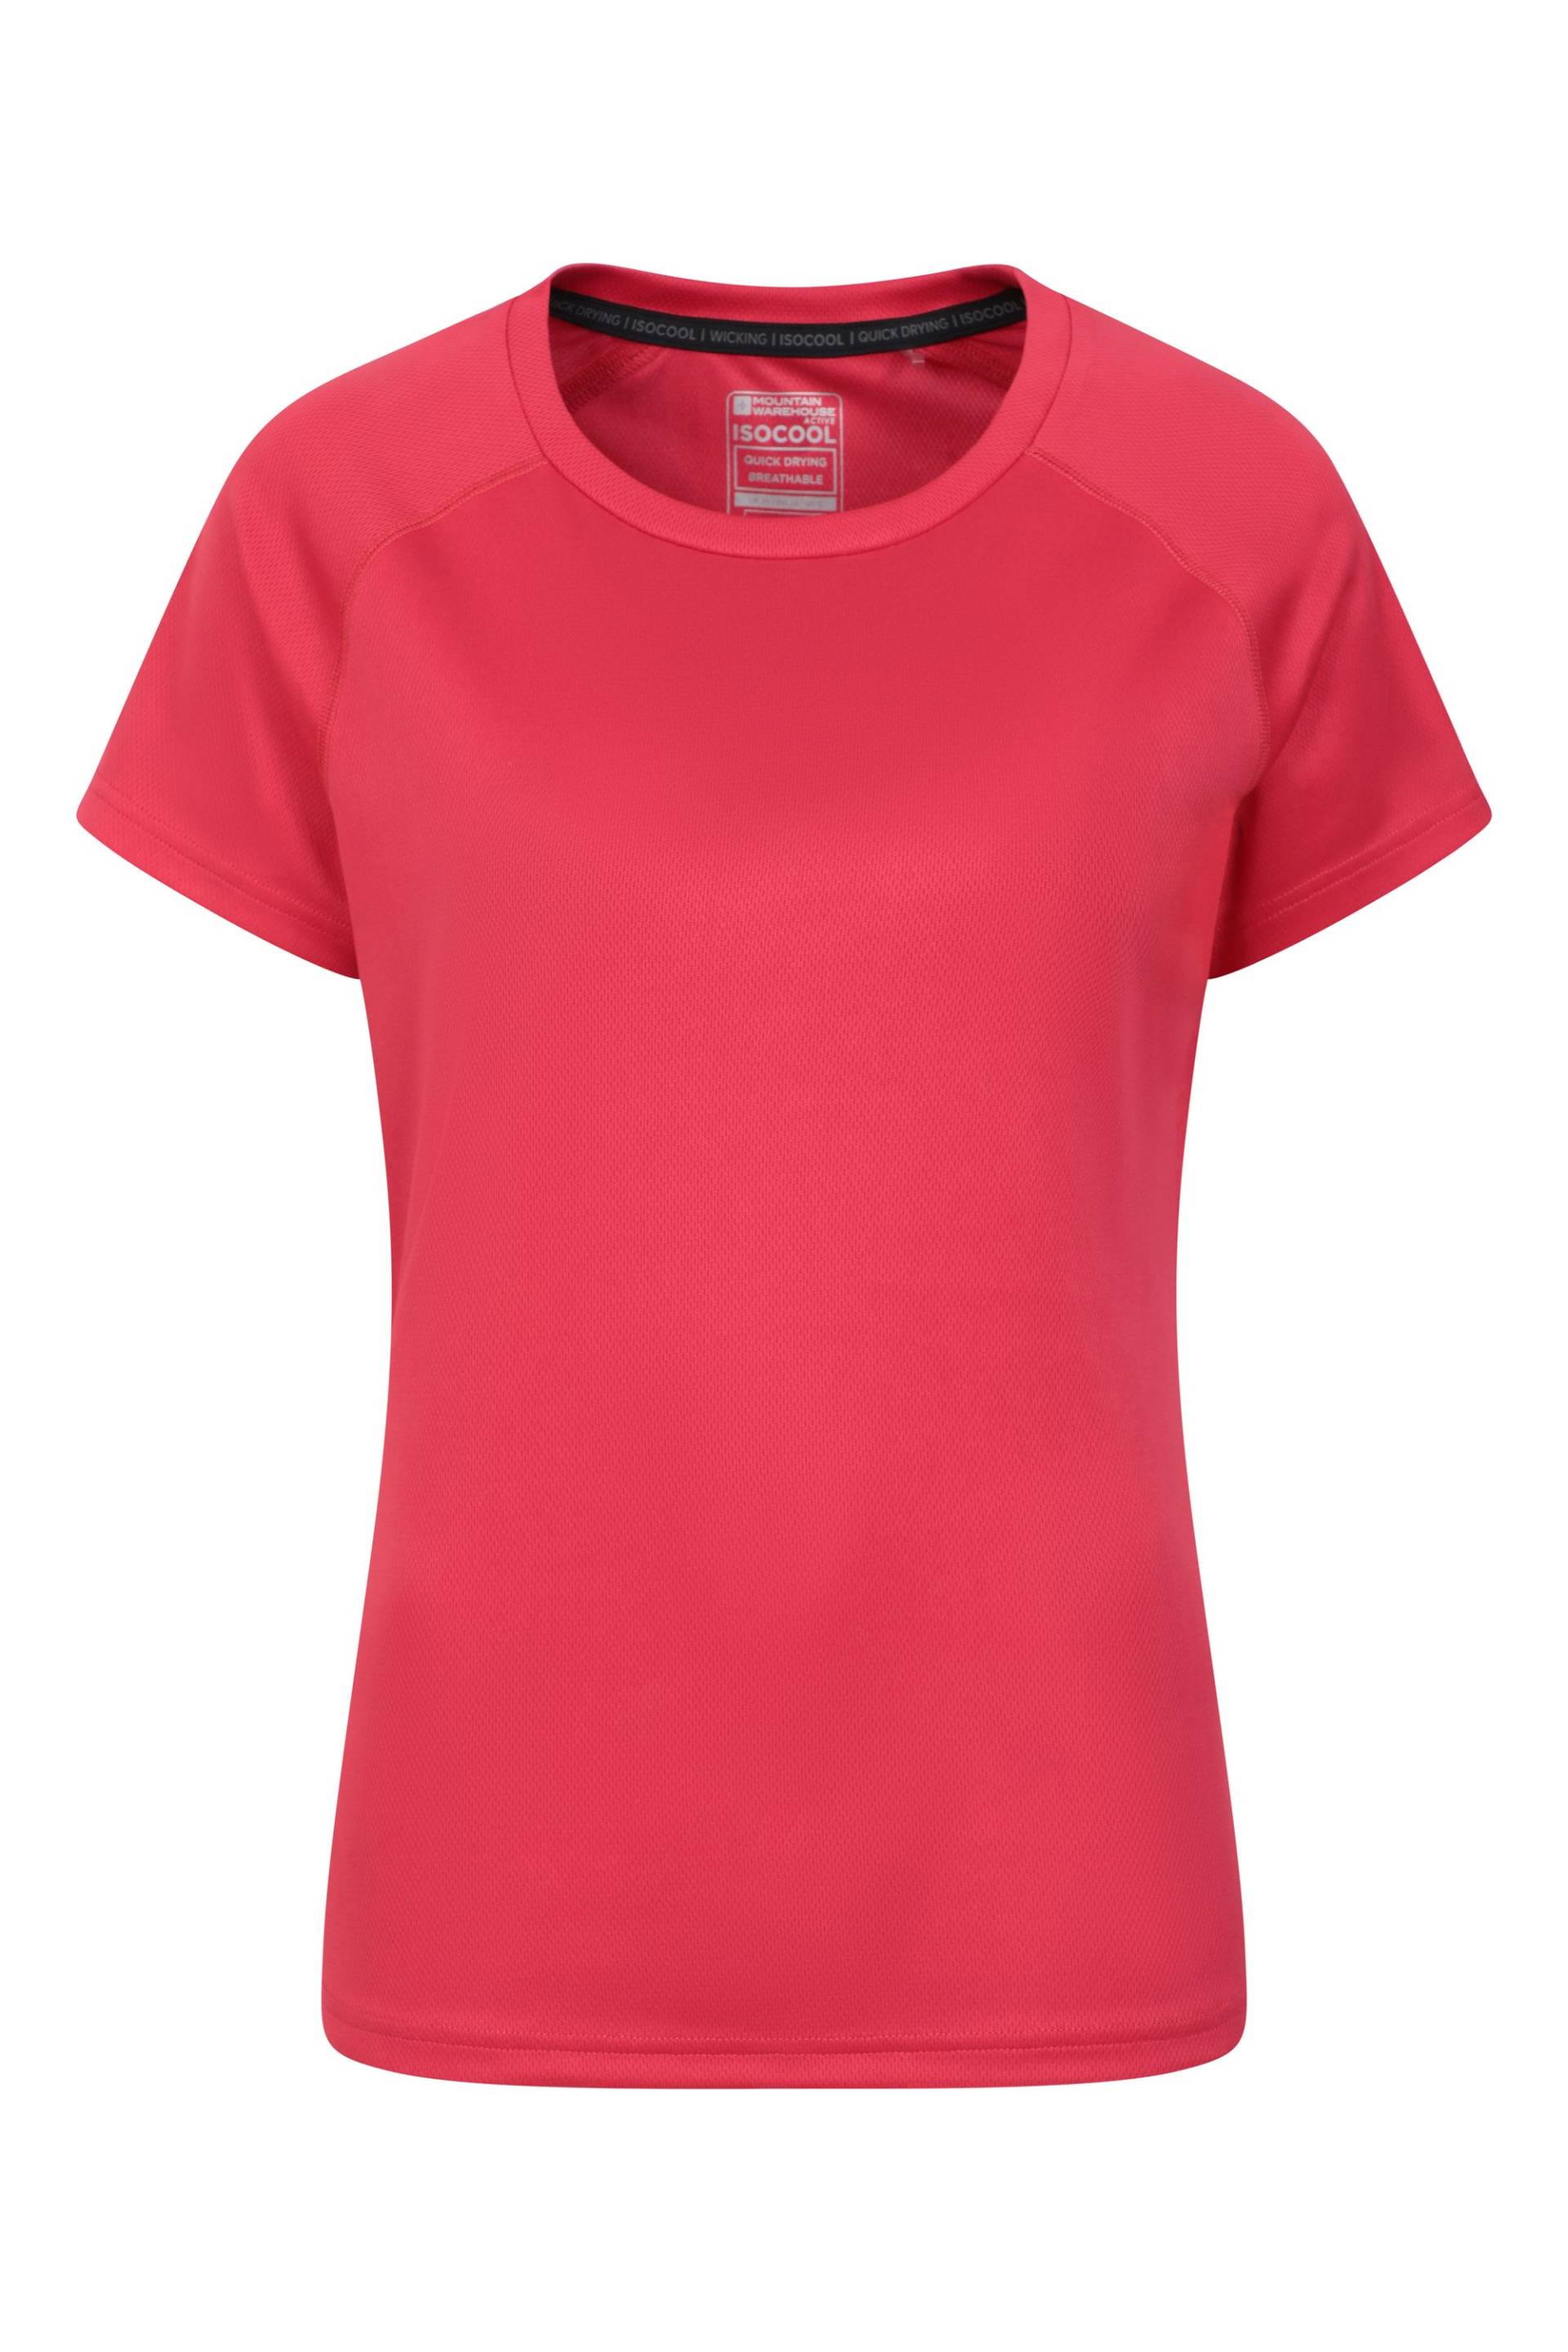 Endurance Damen T-Shirt - Pink von Mountain Warehouse